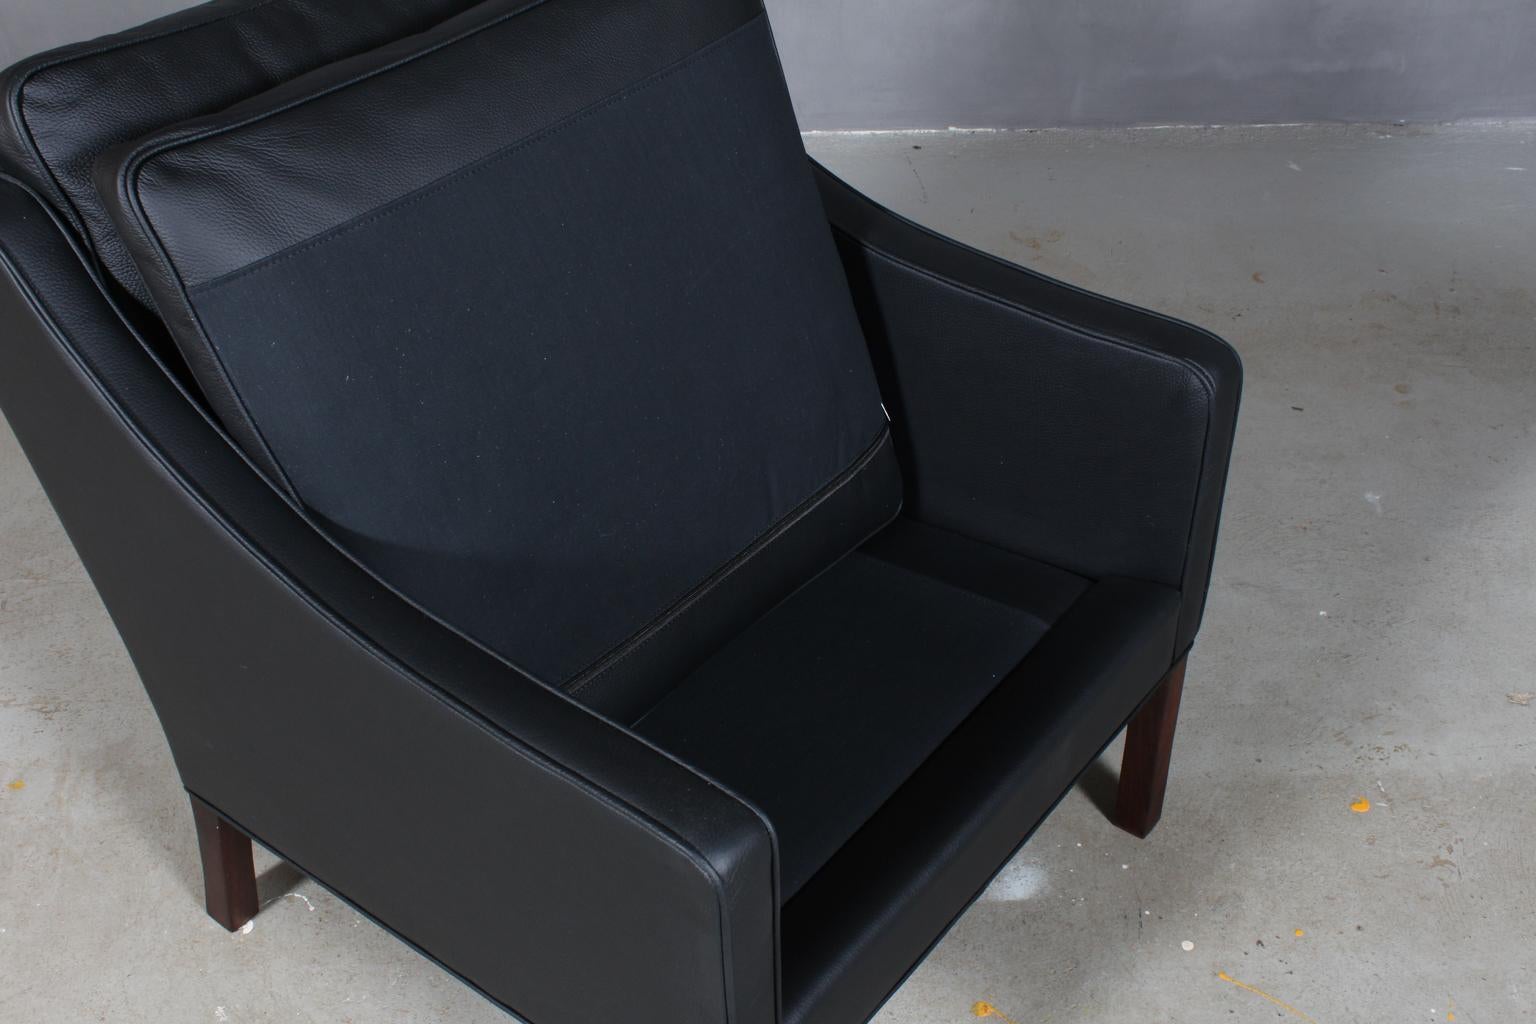 Mahogany Børge Mogensen Lounge Chair, Model 2207, New black leather upholstery